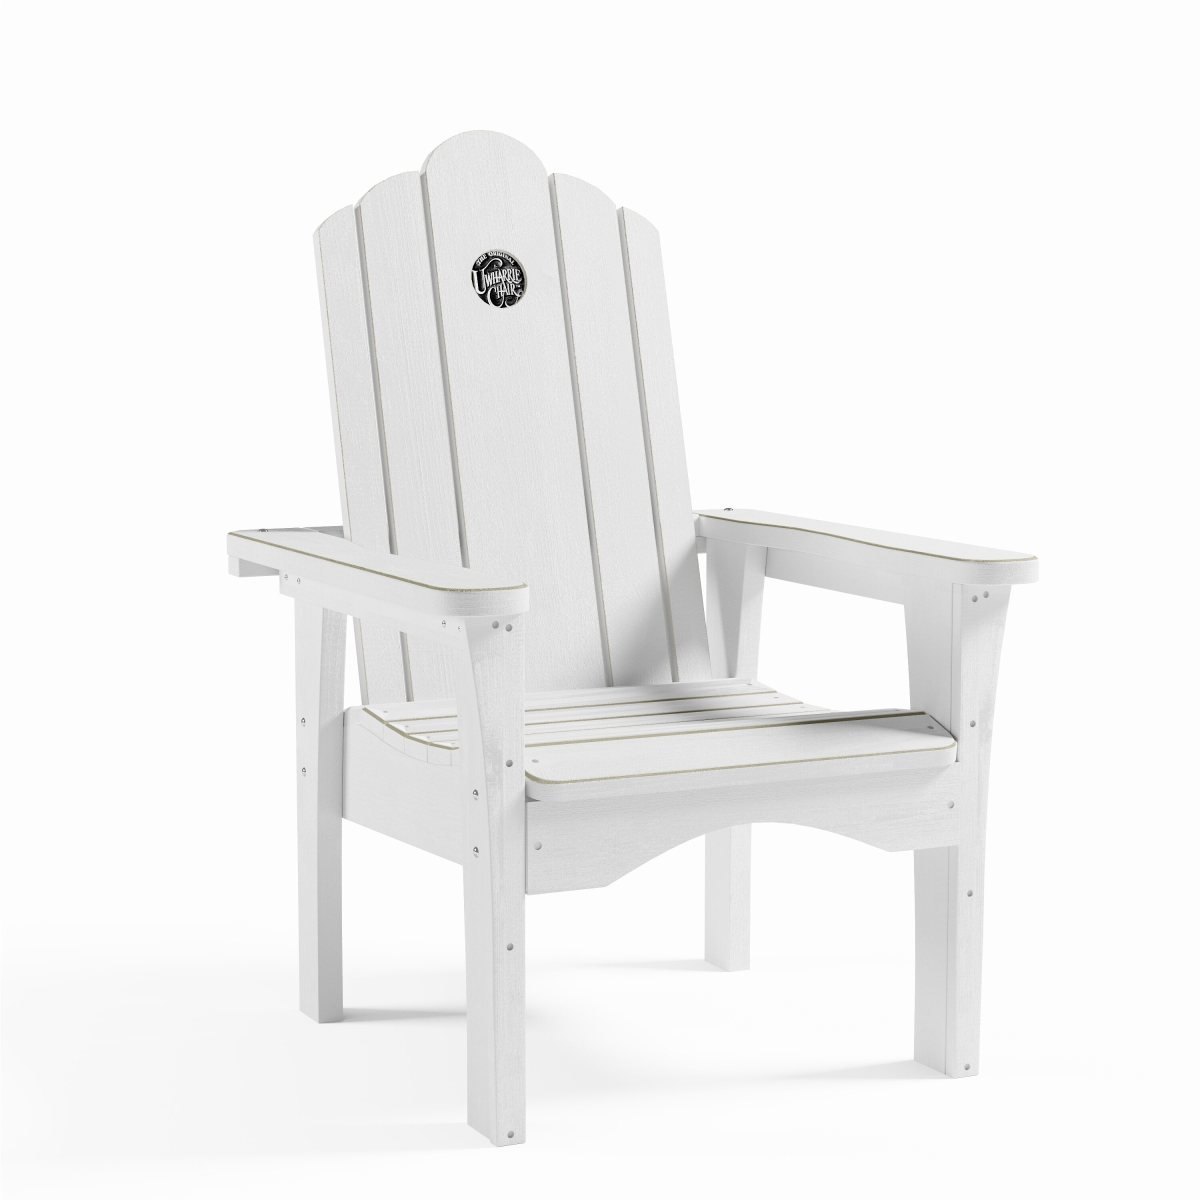 S114-p82 Original Wood Lounge Chair, Coffee Polymer - 30.5 X 33.5 X 43.5 In.